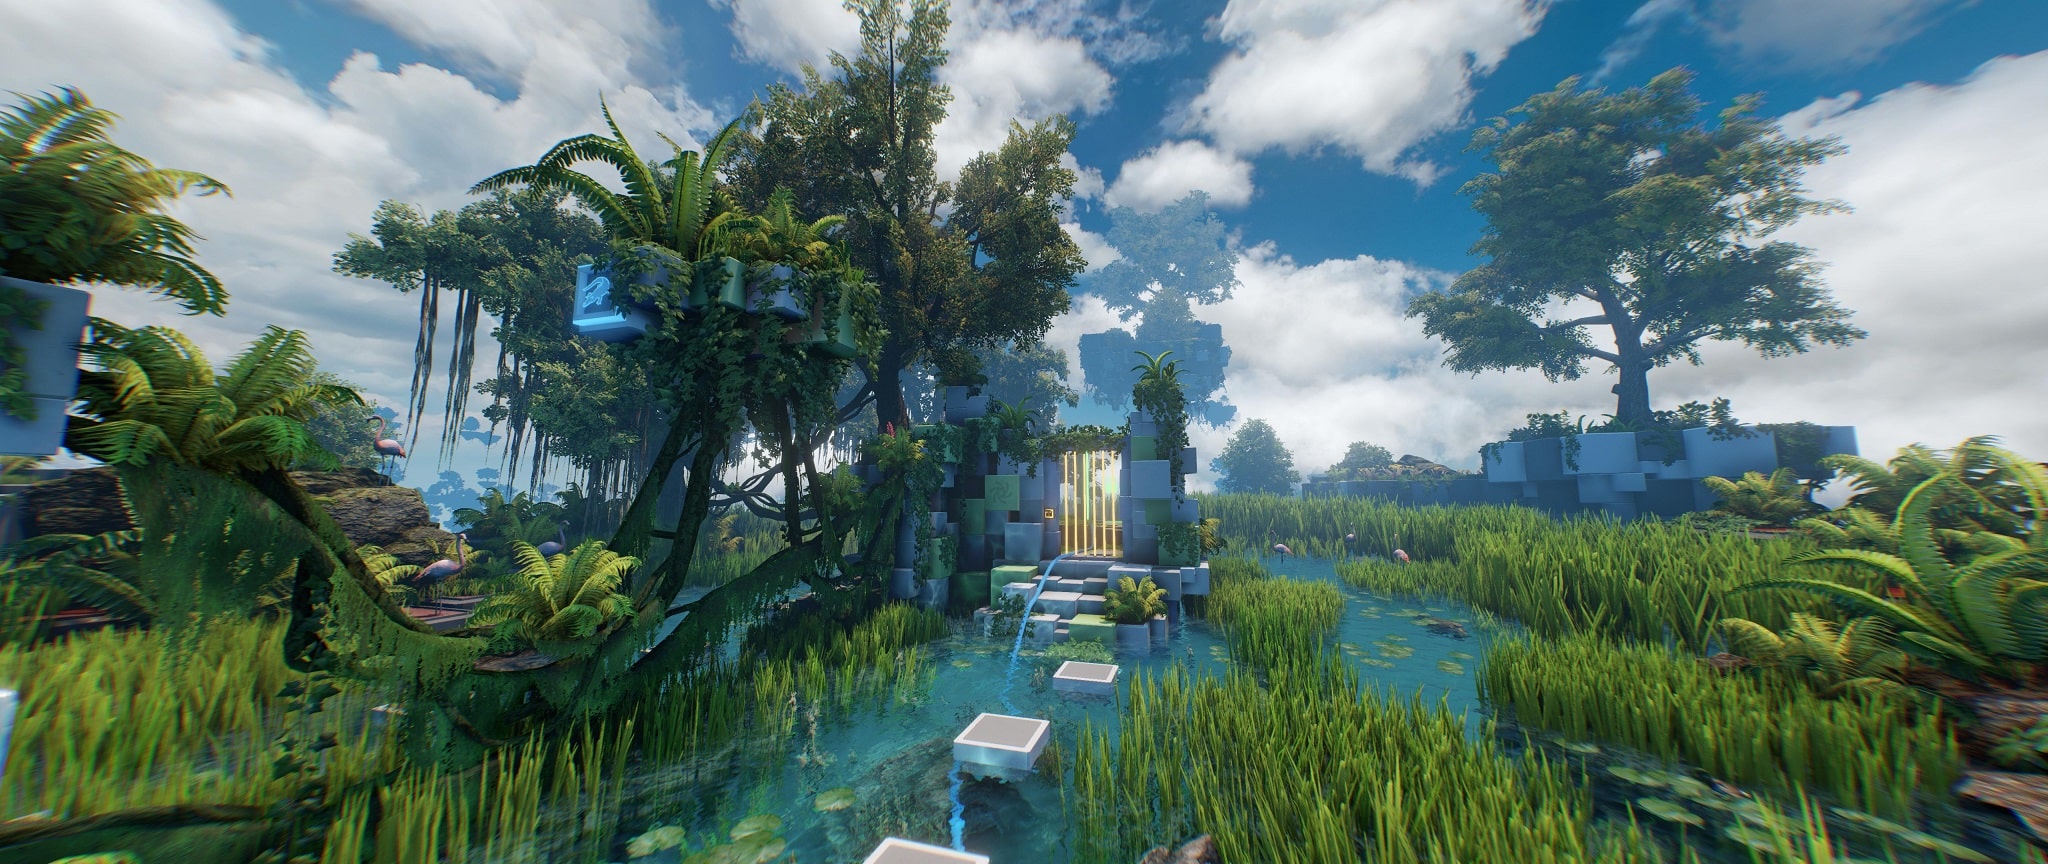 Jungle quest virtual reality screenshot 4 sml